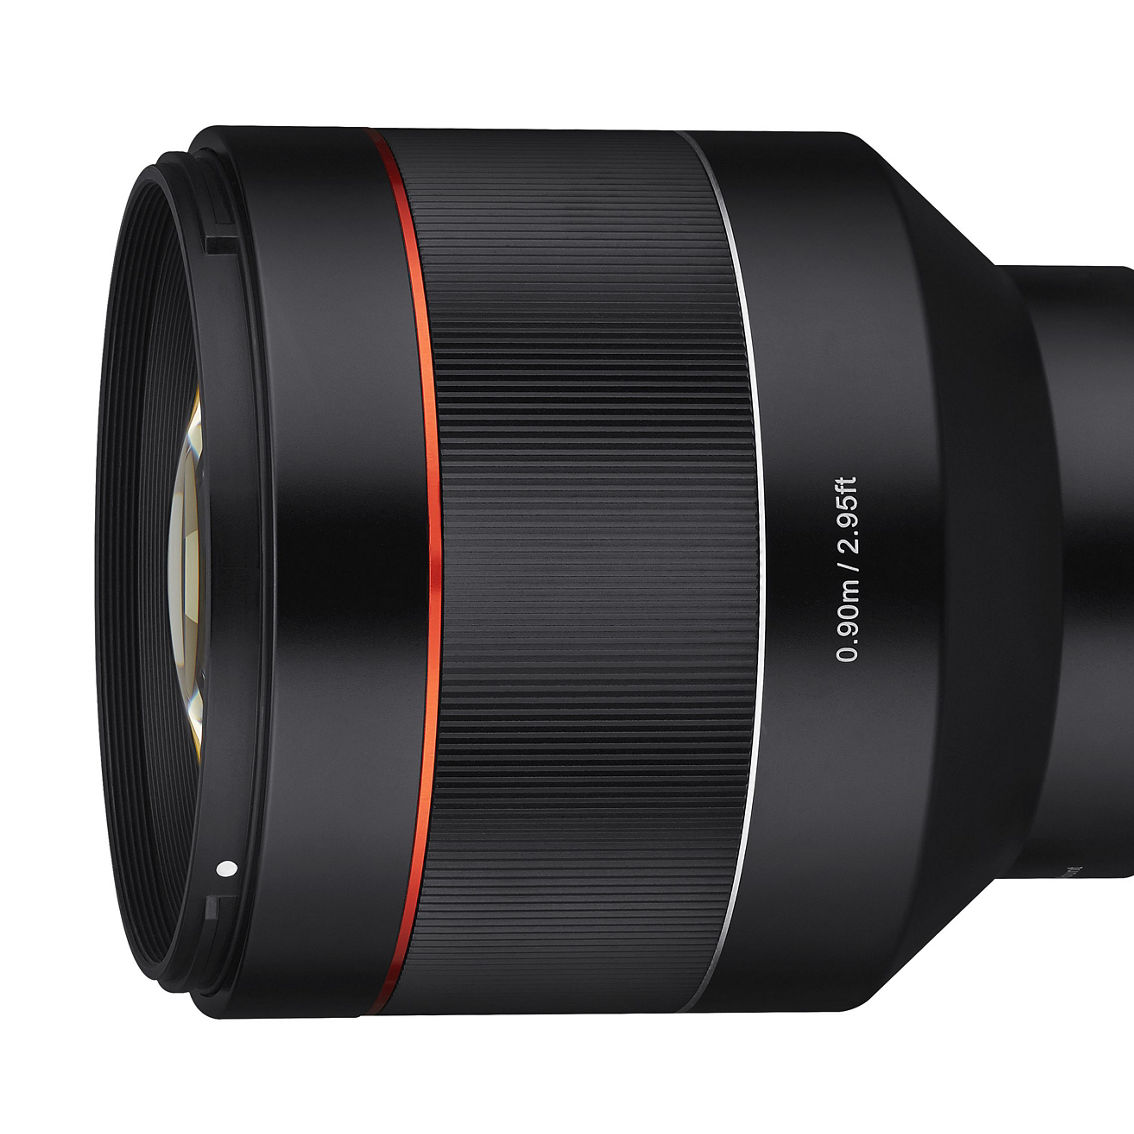 Rokinon 85mm F1.4 AF High Speed Full Frame Telephoto Lens for Sony E - Image 3 of 5